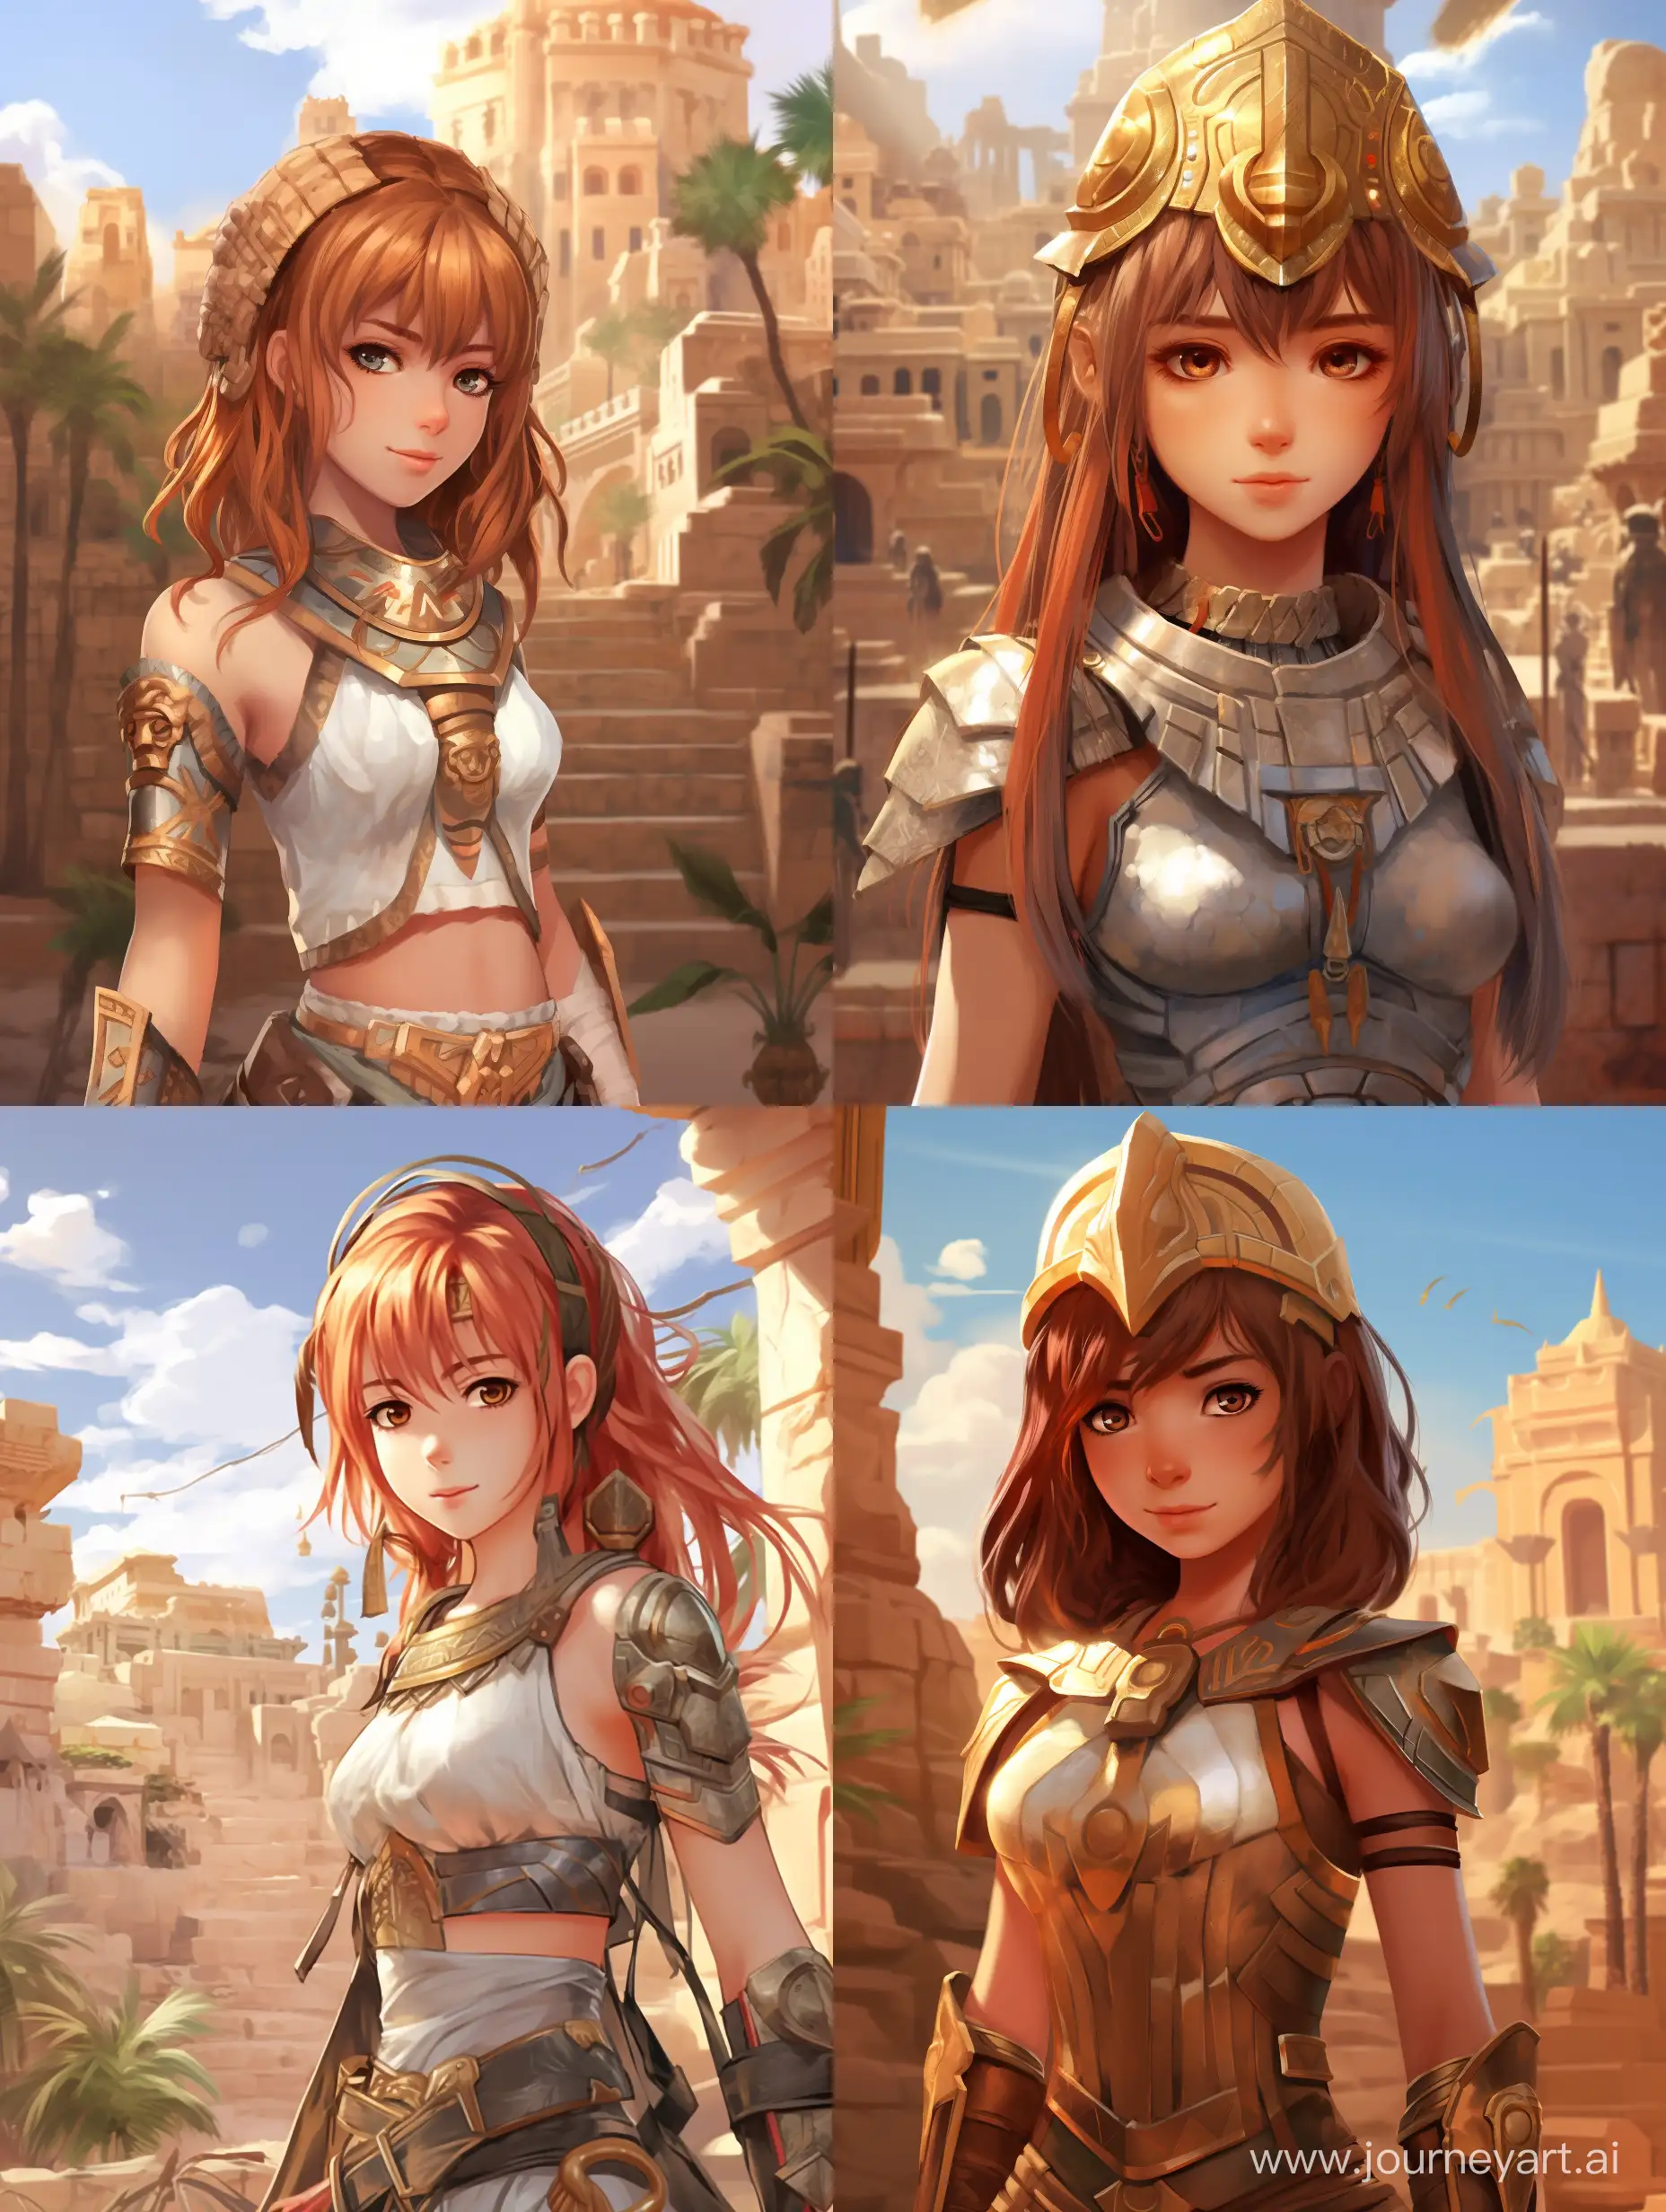 Joyful-Young-Girl-in-Ancient-Egyptian-Anime-Style